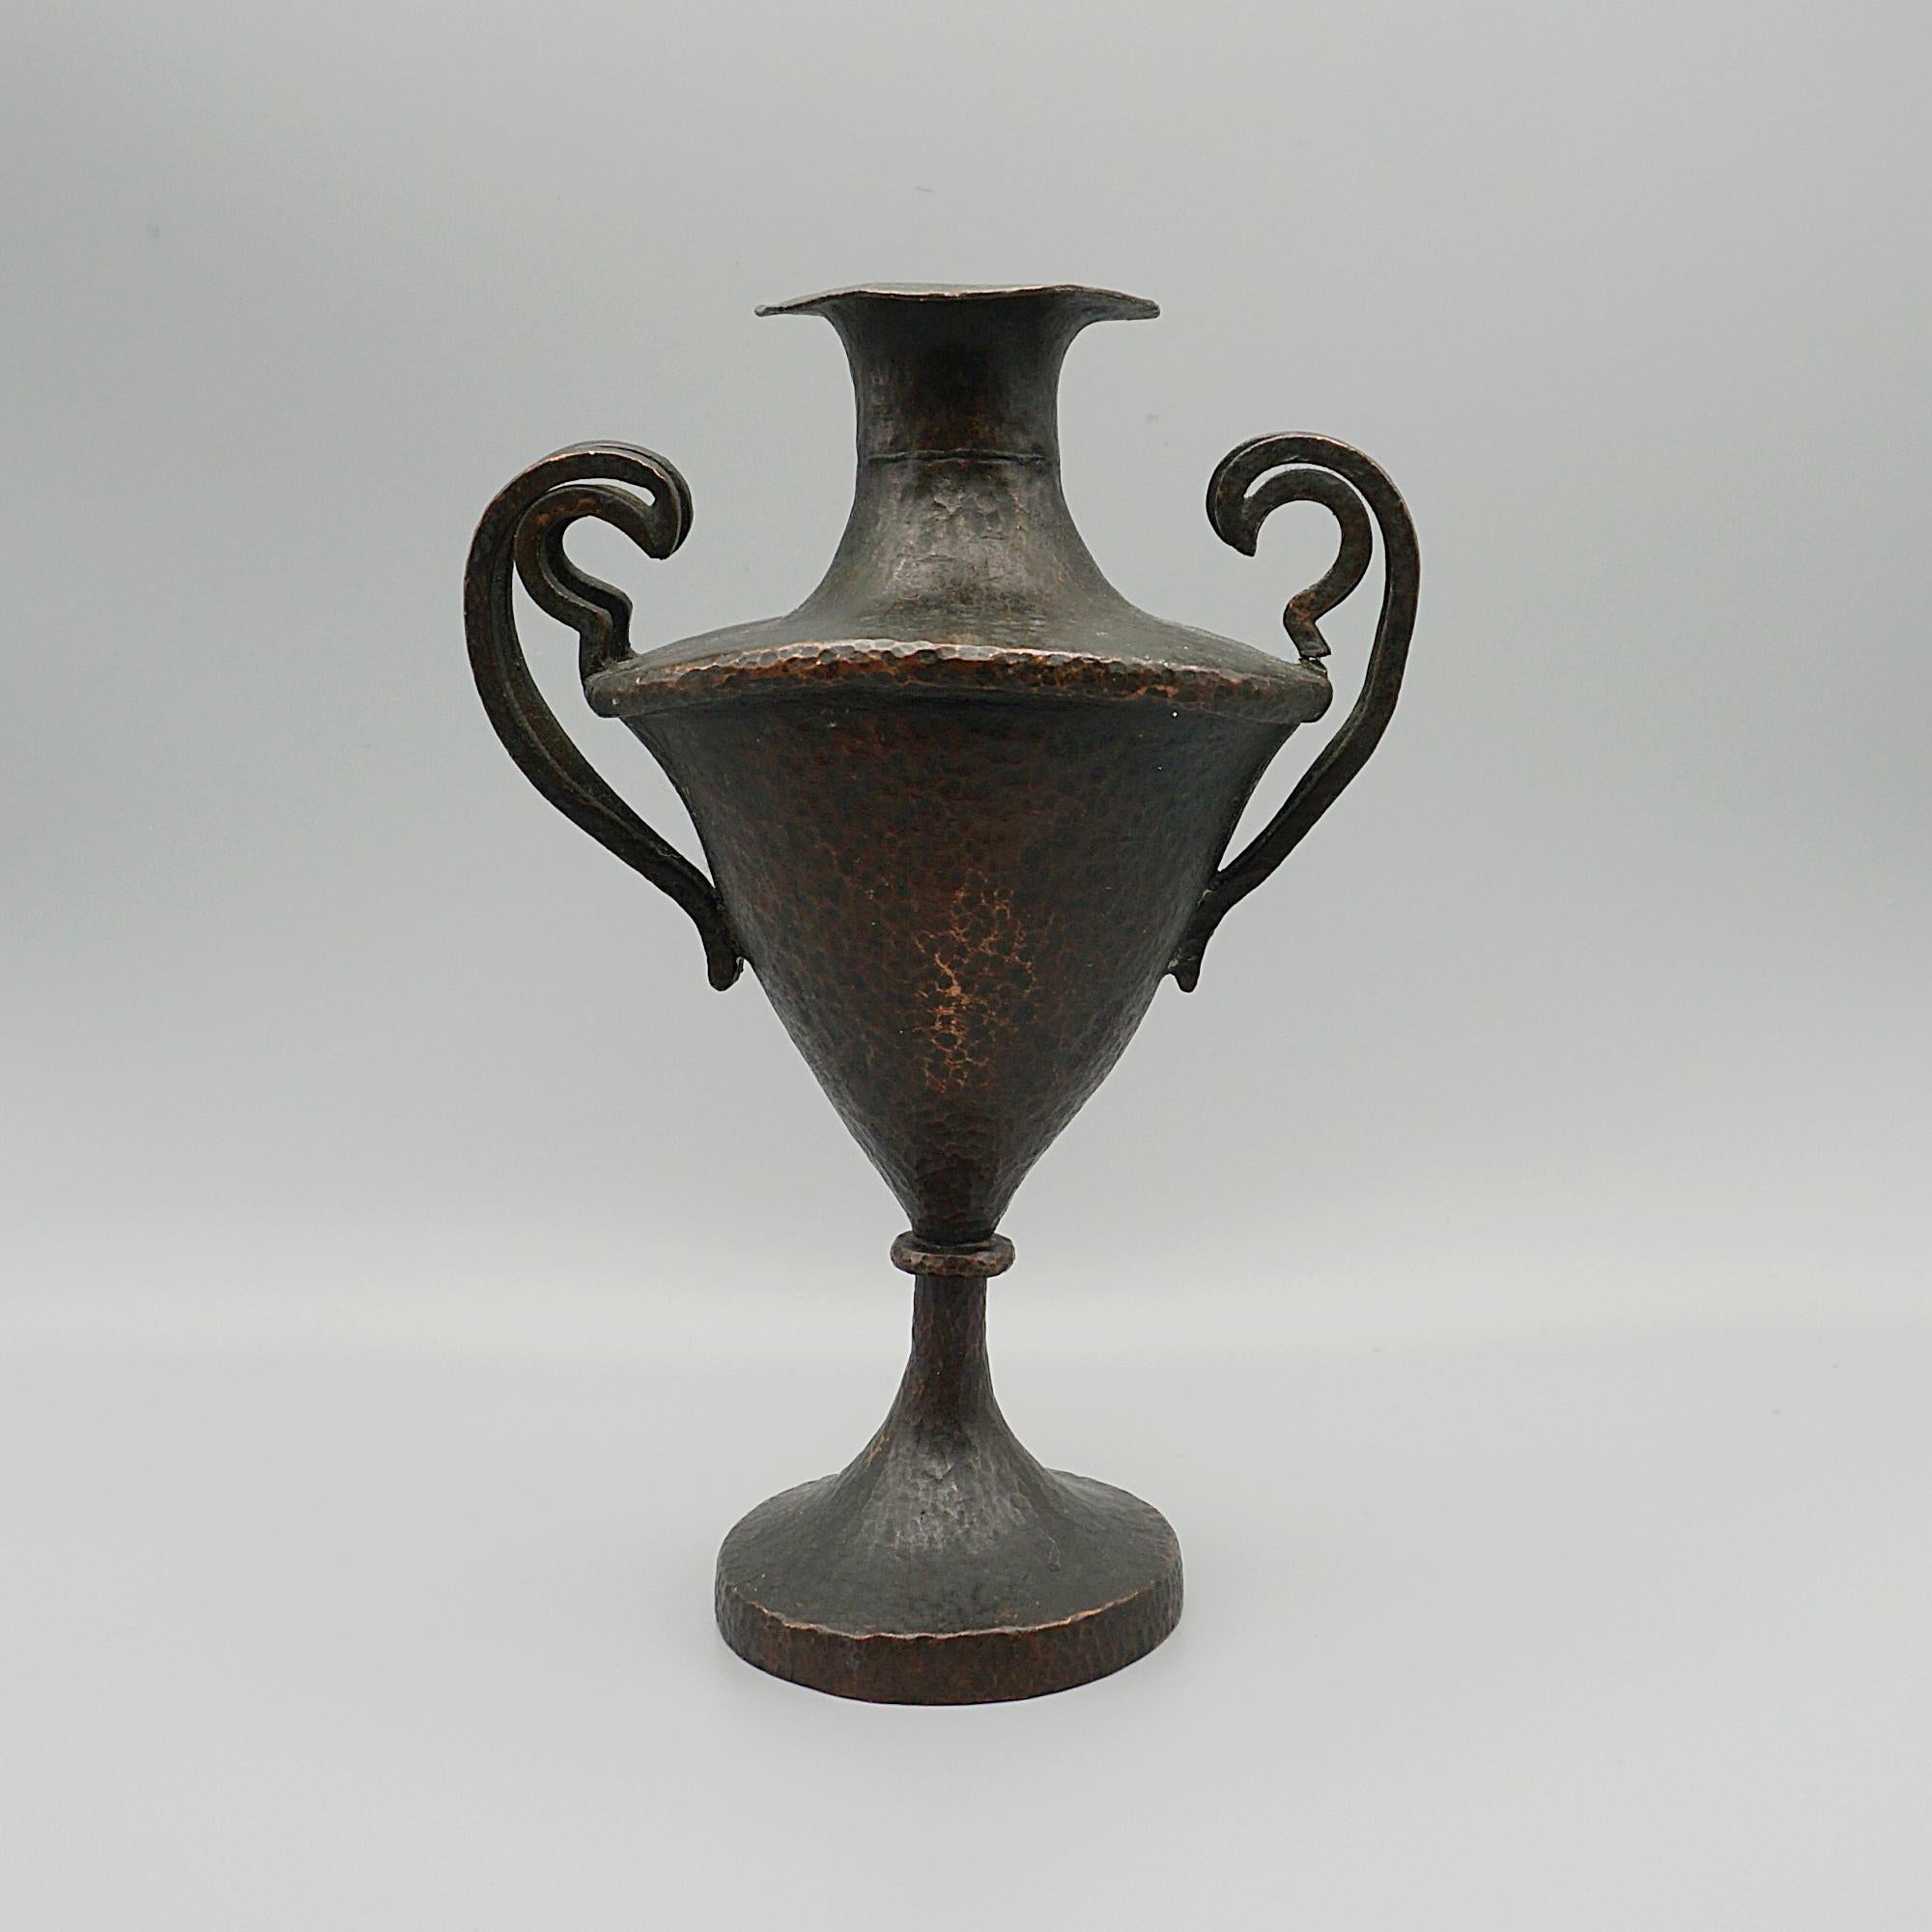 A mid-20th century bronze urn. 

Dimensions: H 21cm W 15.5cm D 10cm 

Origin: English

Date: Circa 1940

Item Number: 1903242